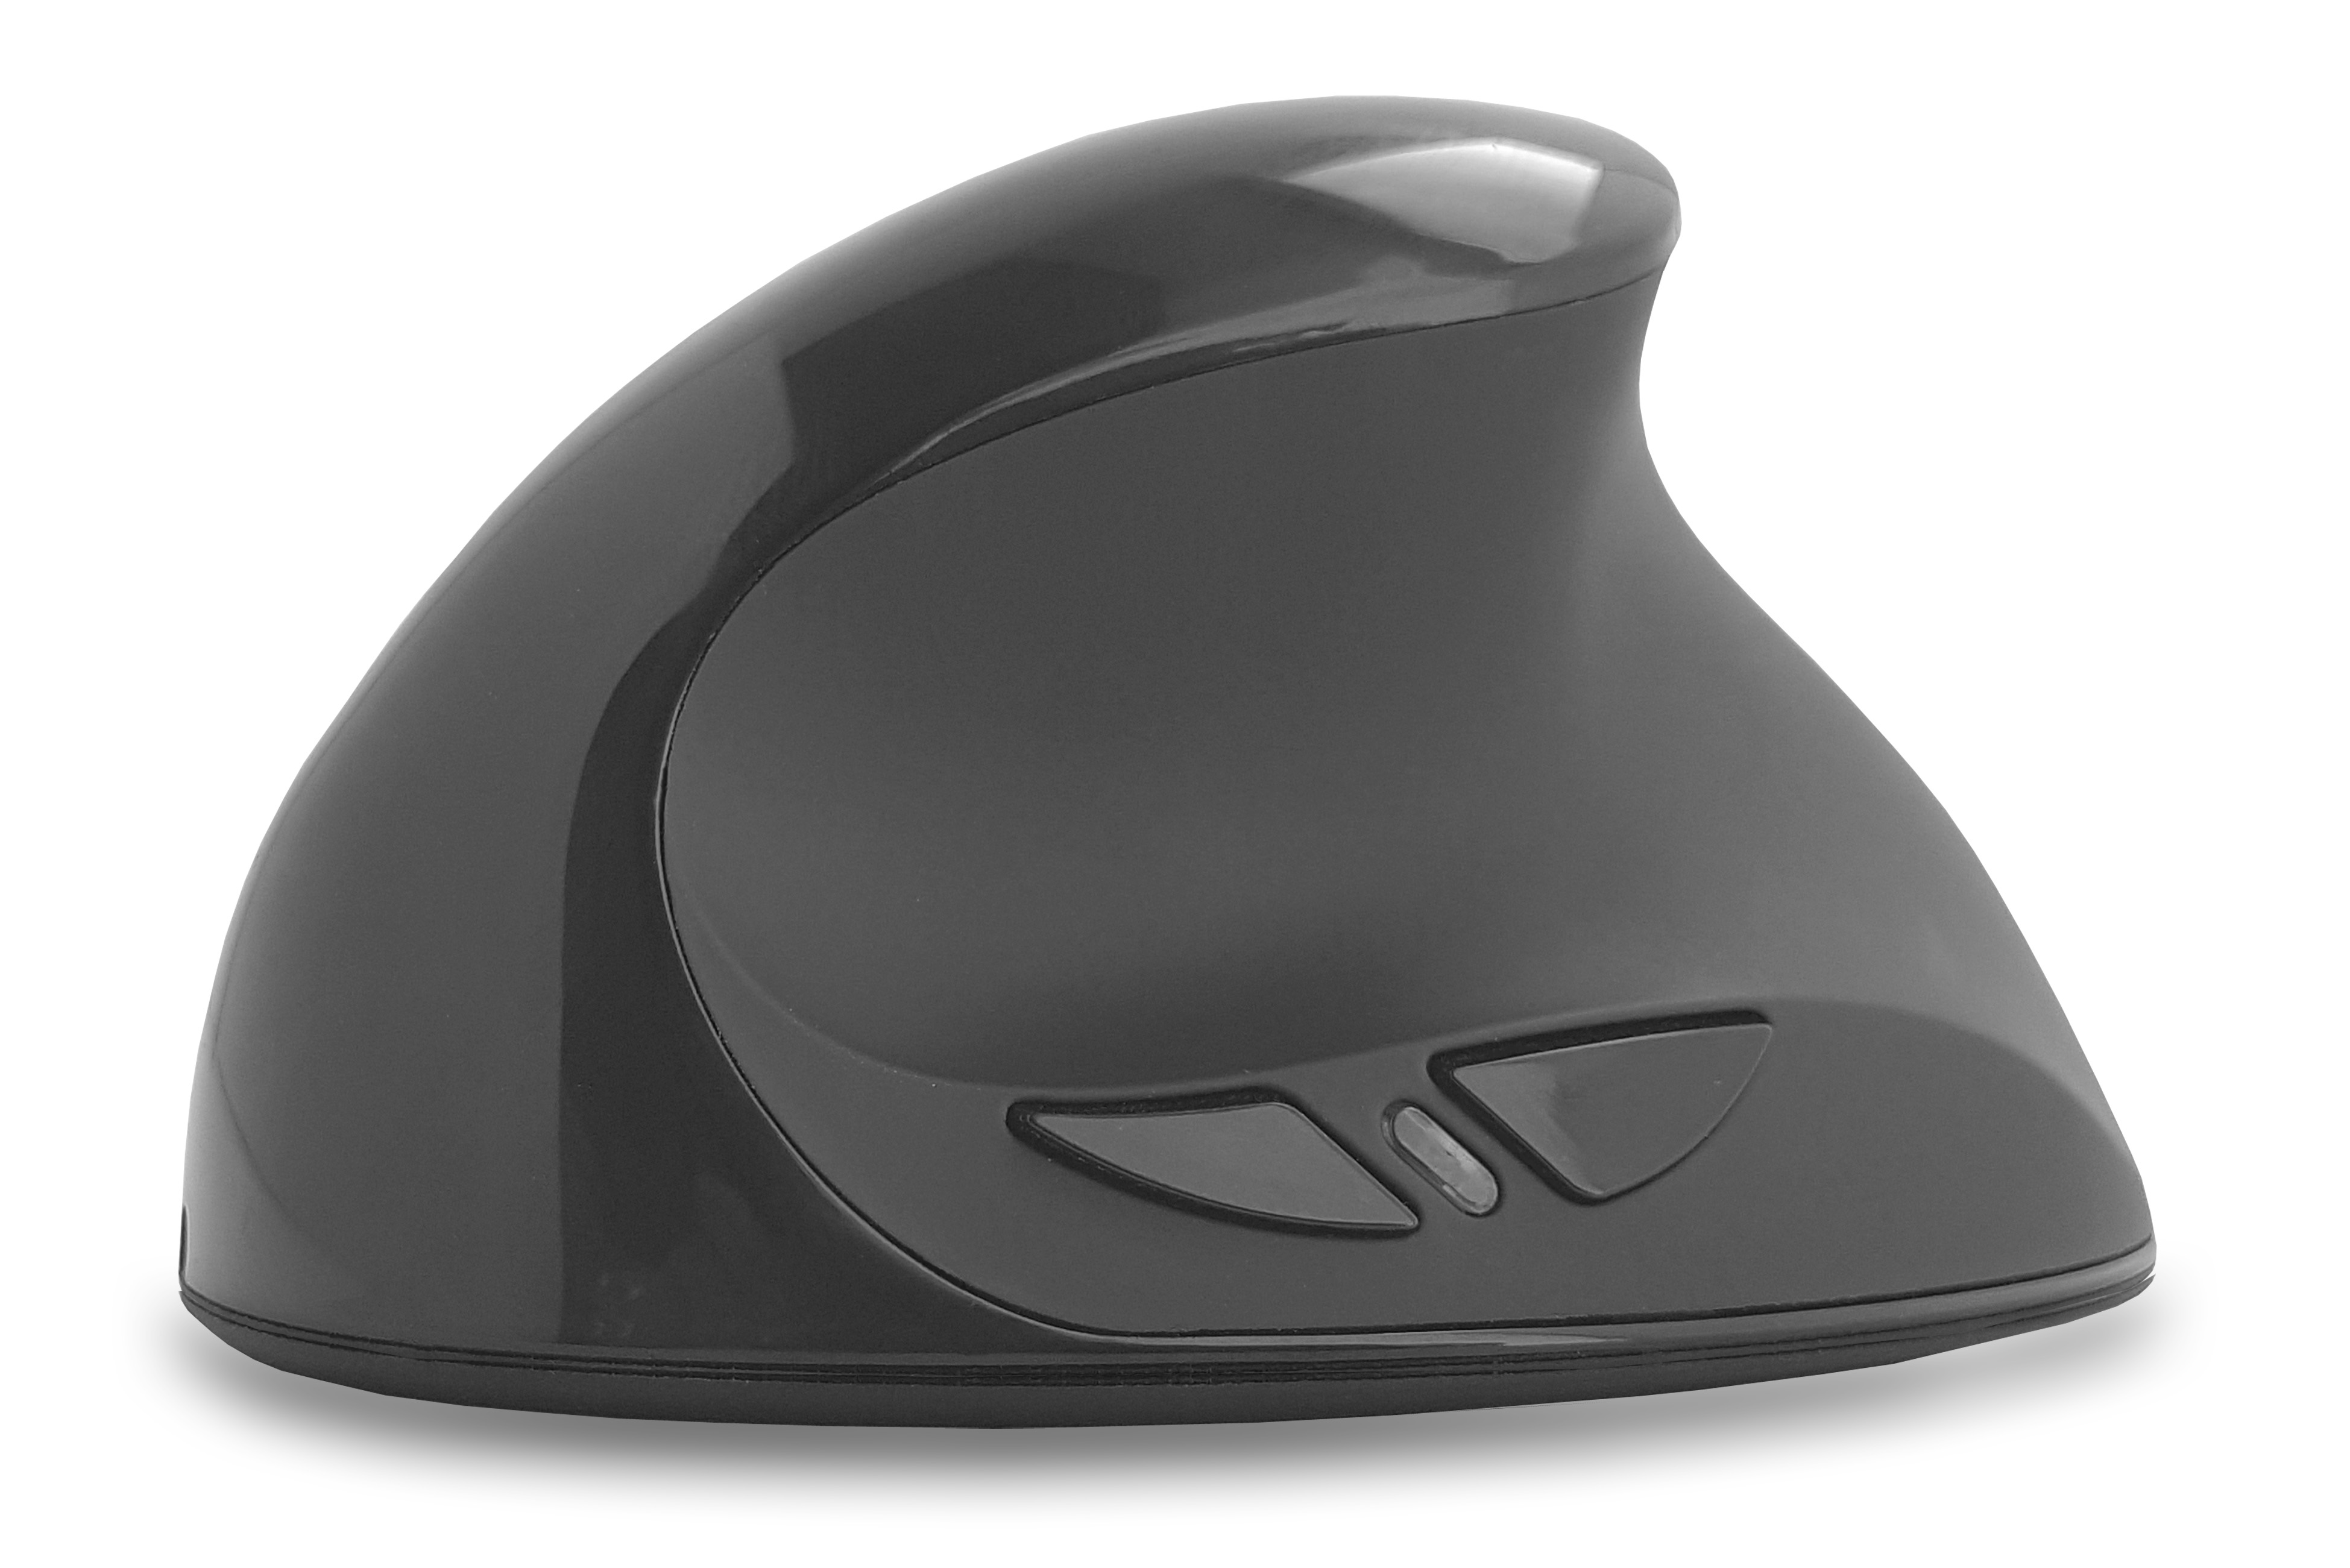 JI-CW-01 Rechtshänder Maus, schwarz Wireless Rechts JENIMAGE Kabellos ergonomische